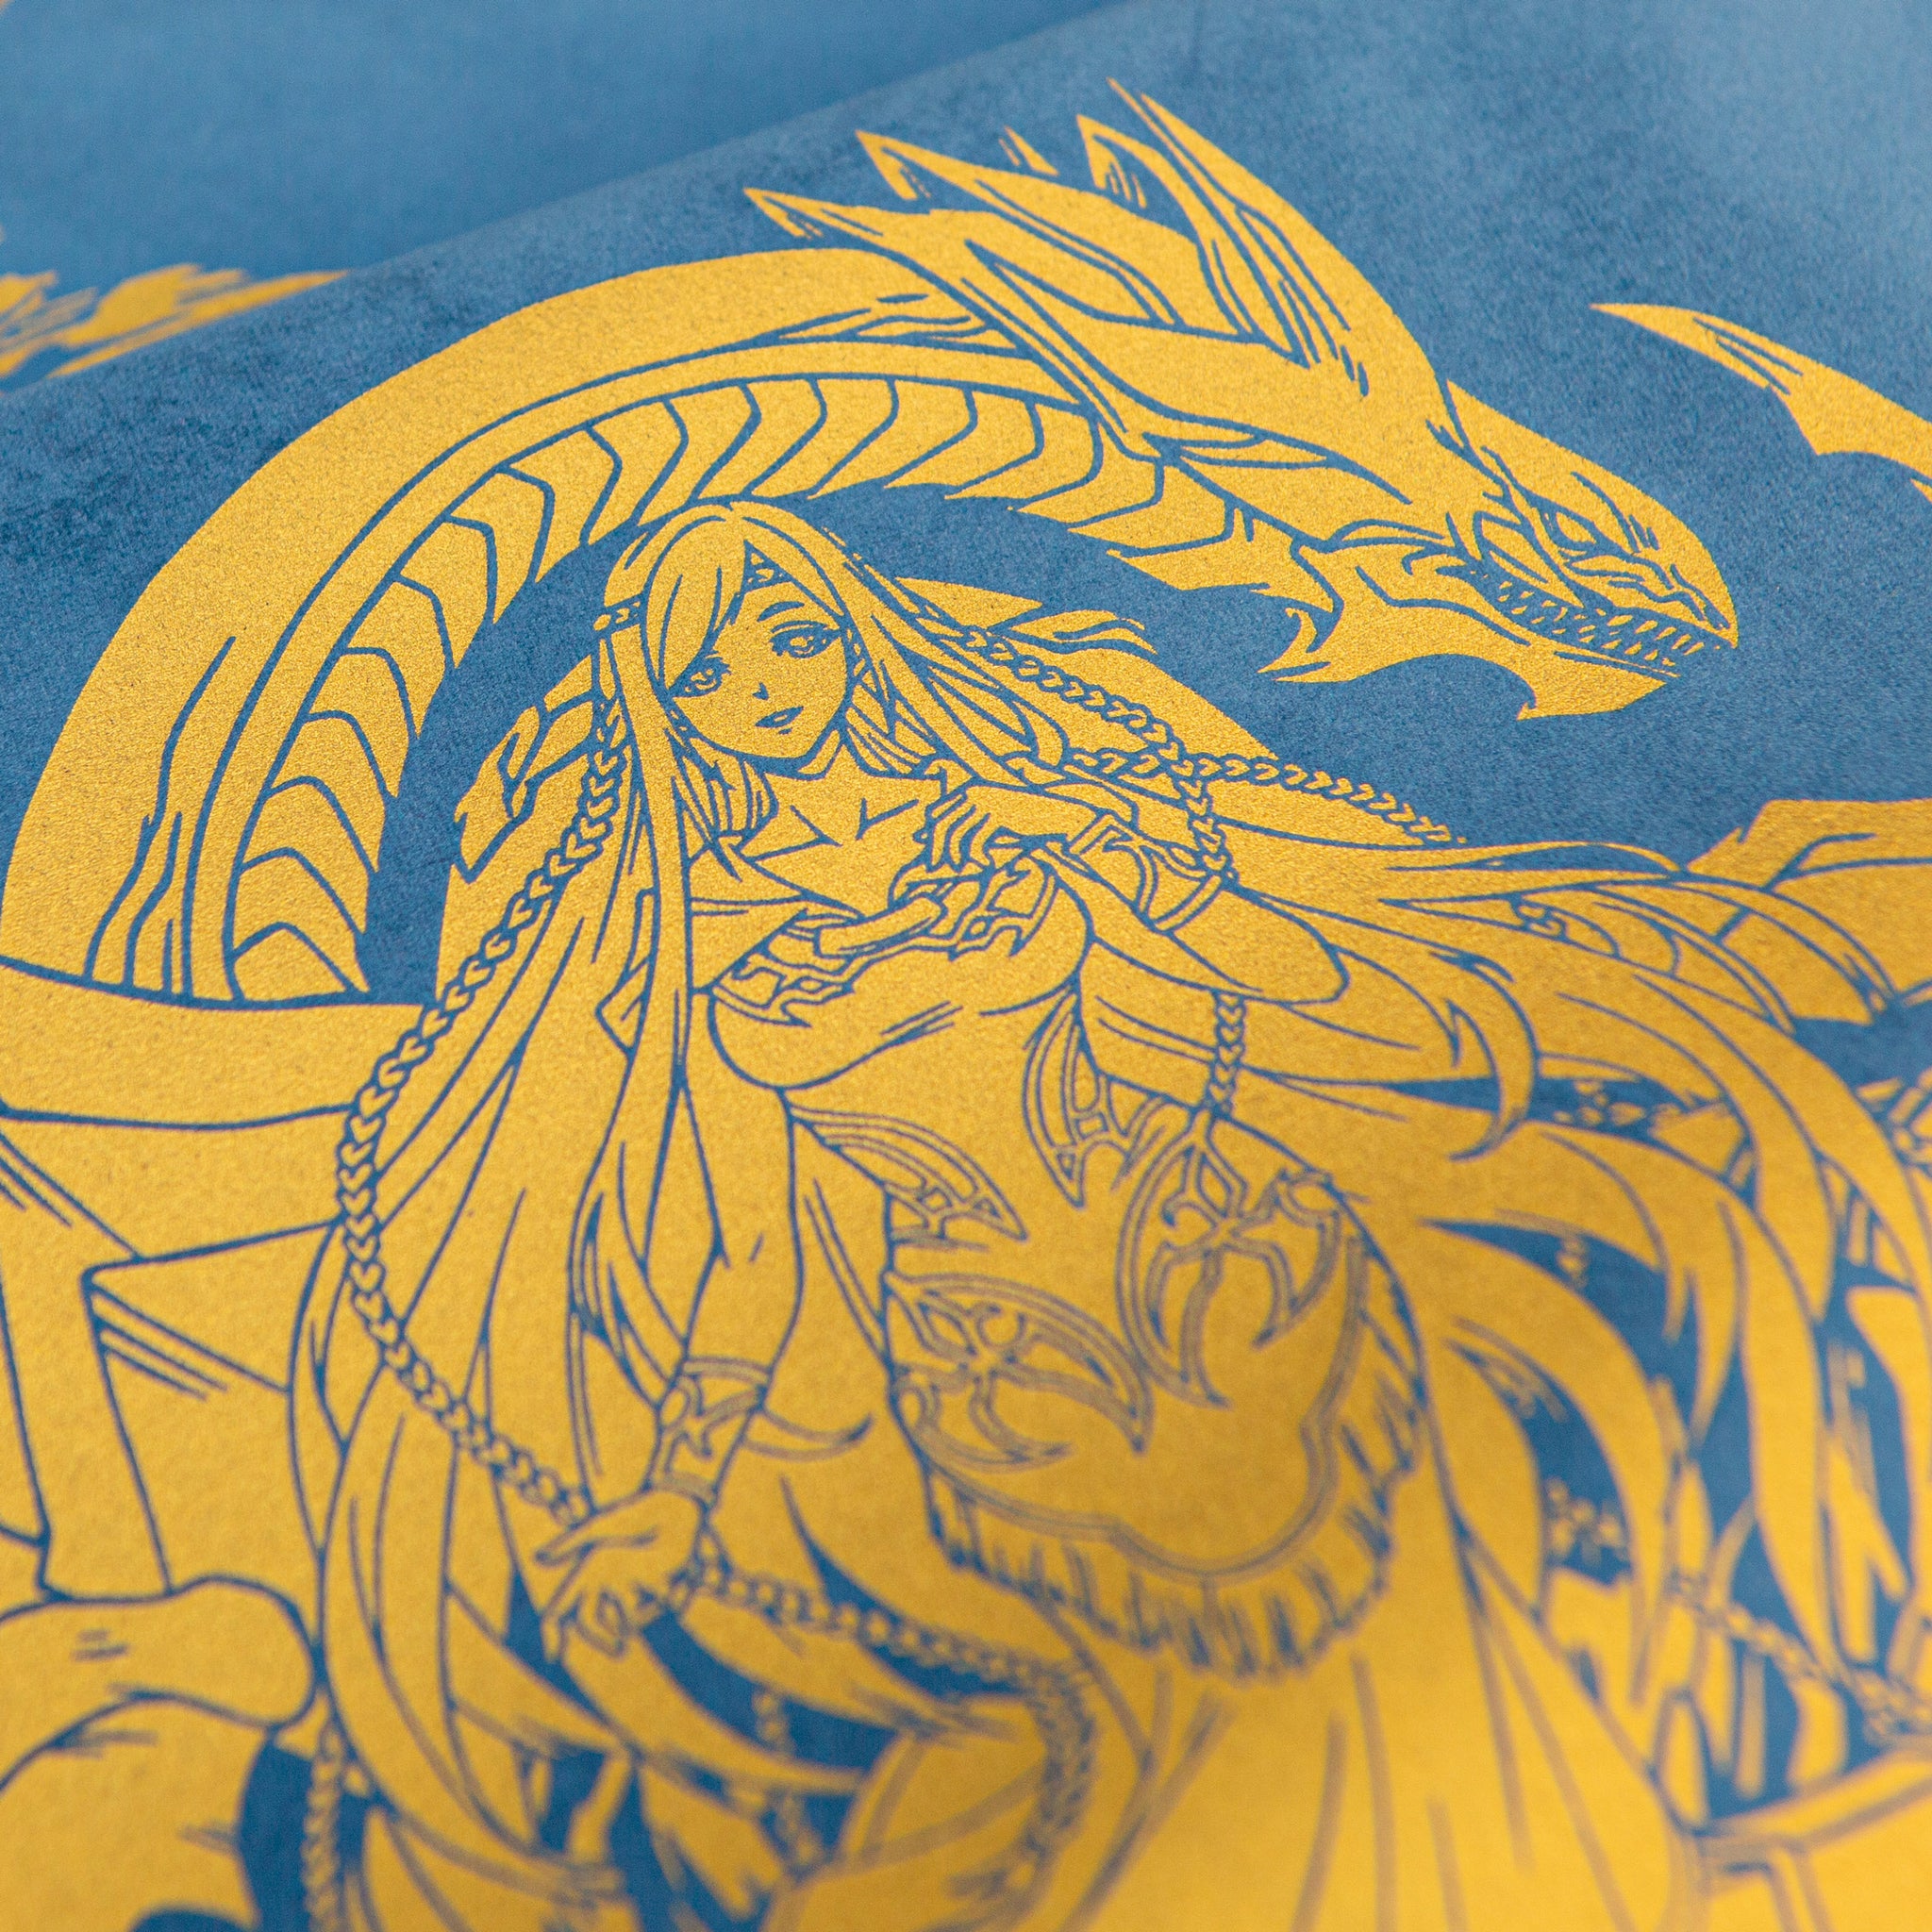 The Dragon's Maiden | Ultraglide Lapis x Metallic Gold